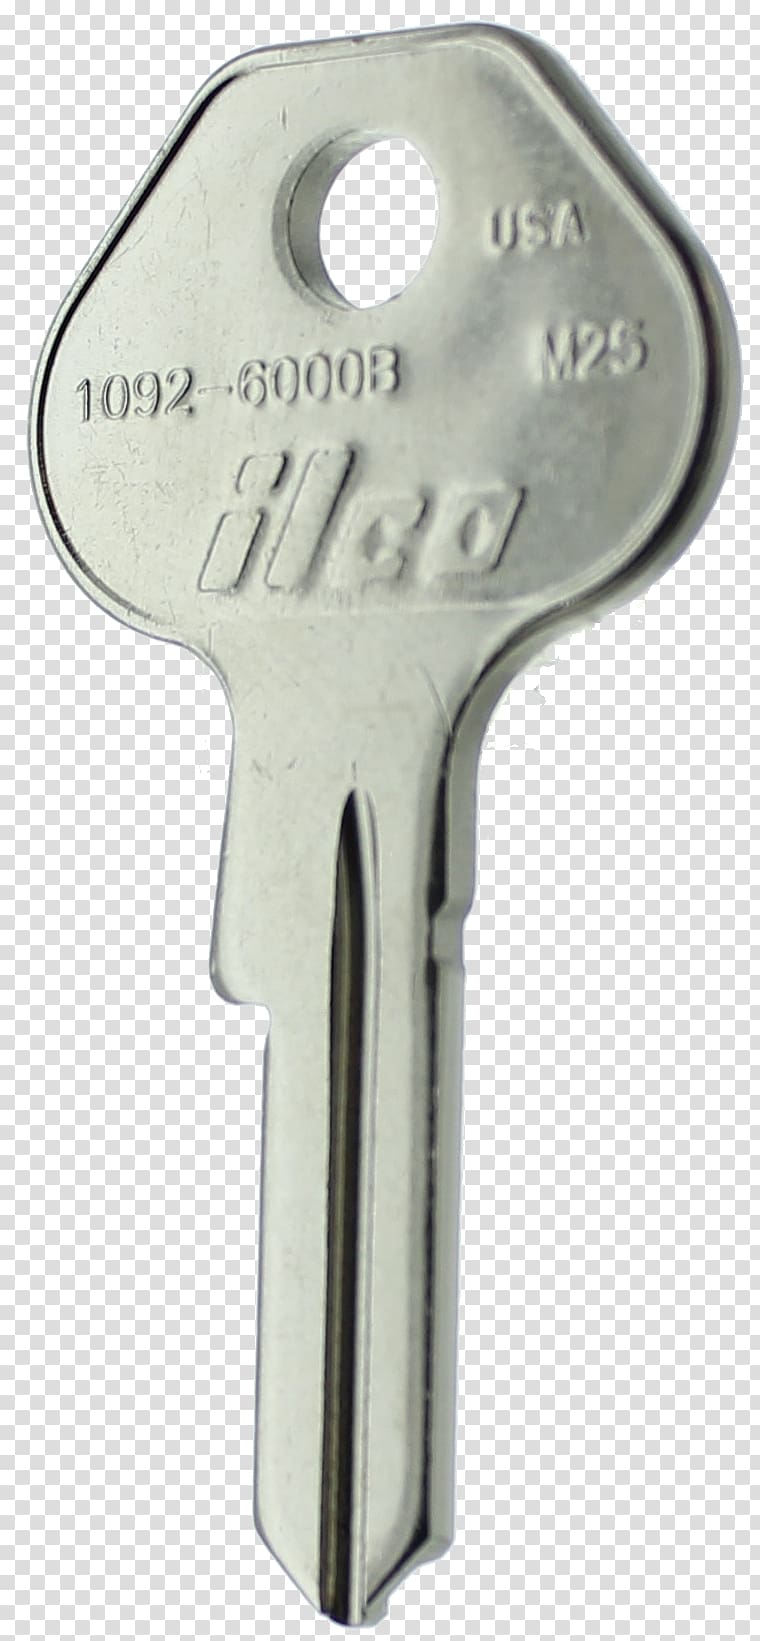 Padlock Key blank Key Craze Inc, padlock transparent background PNG clipart